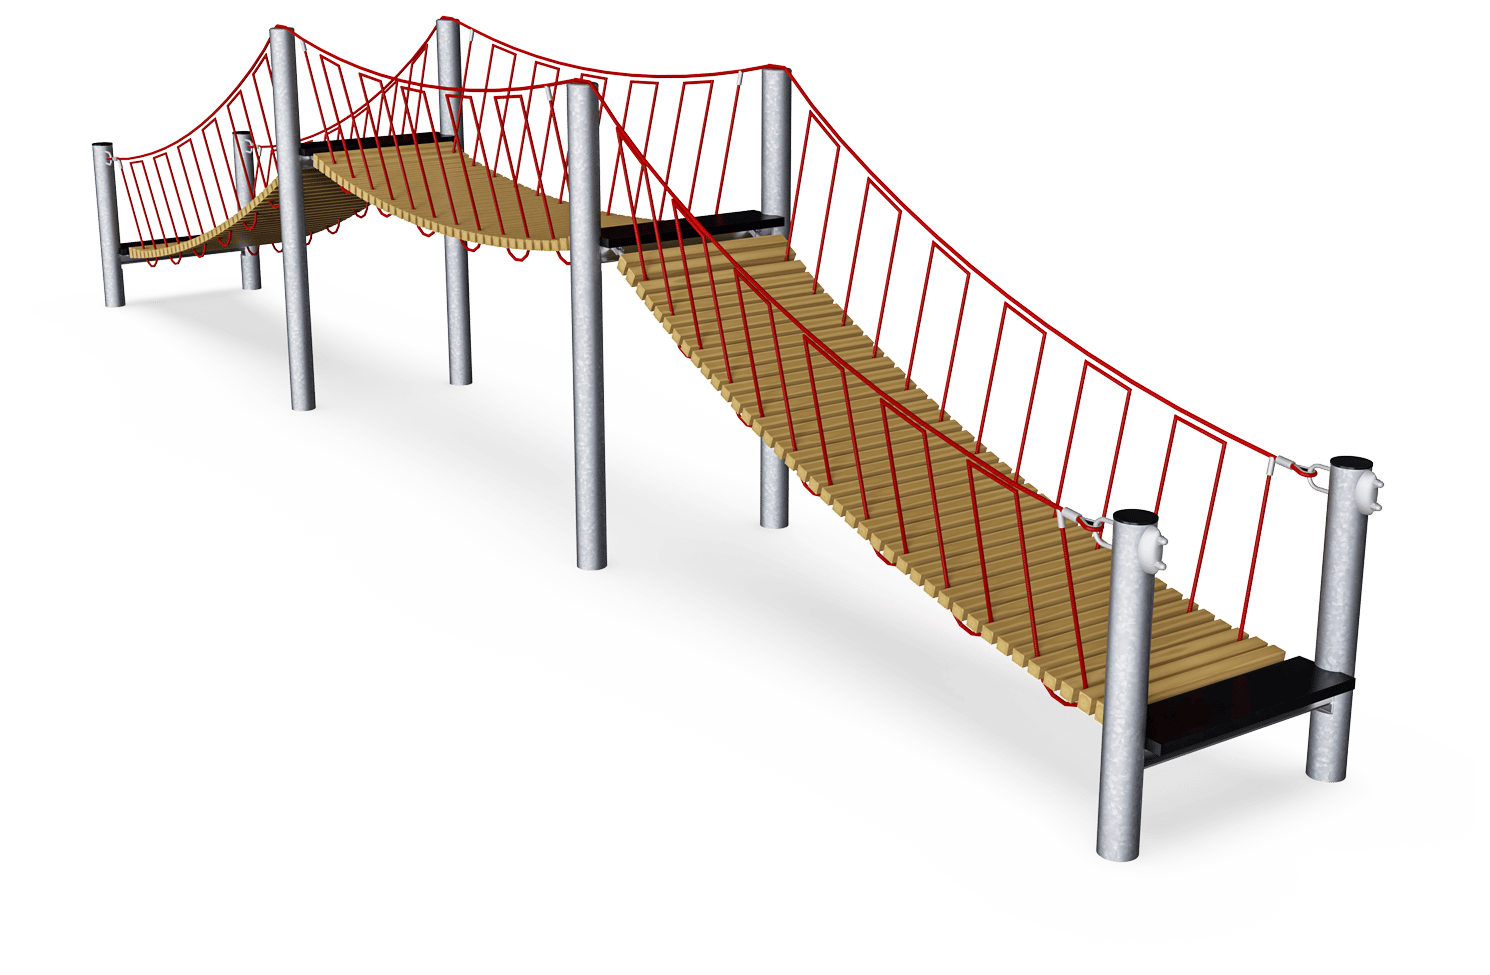 Bridge with Wooden Slats, 39 ft